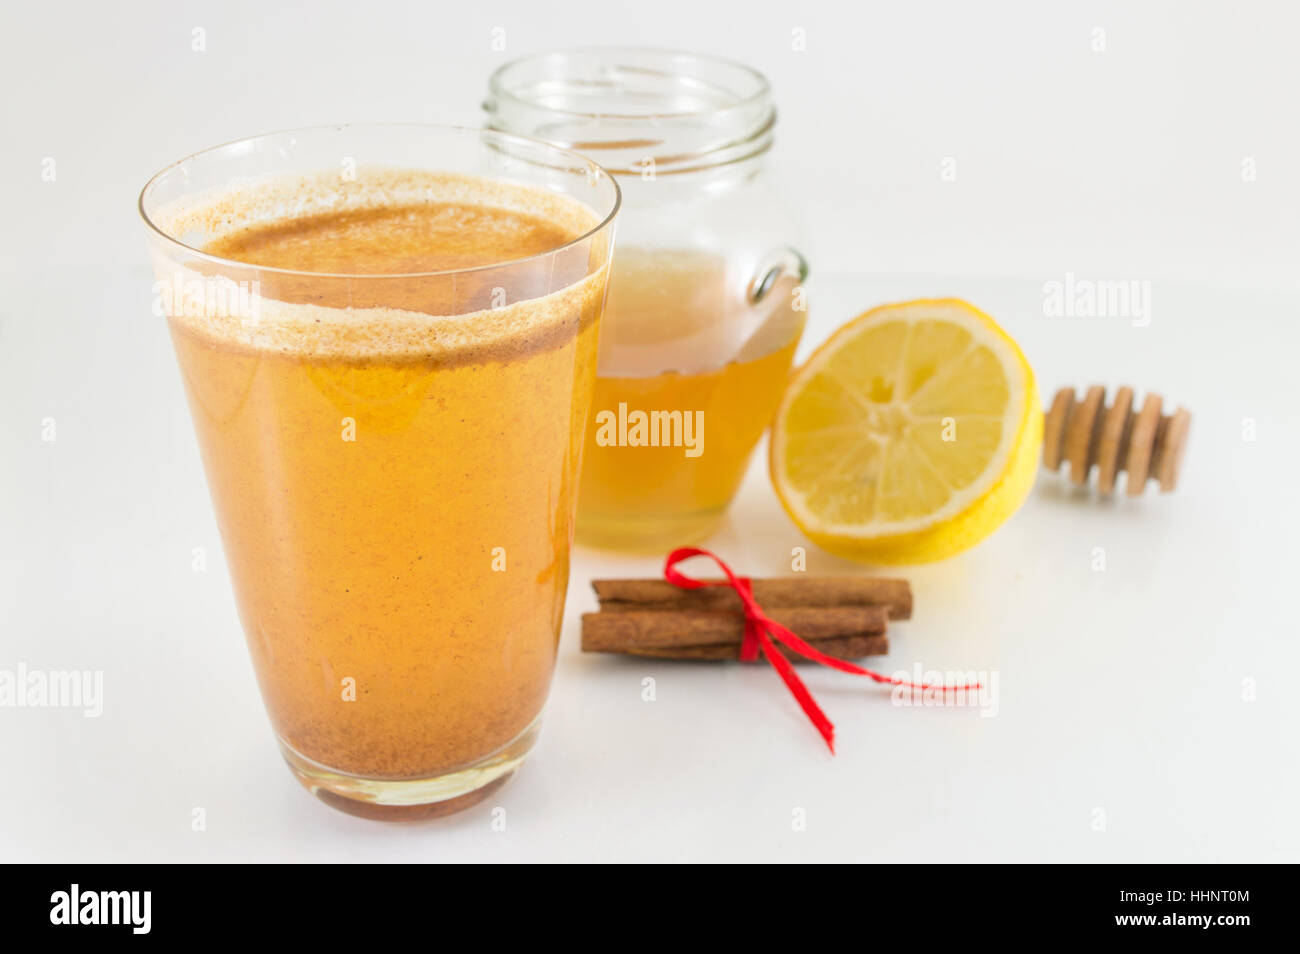 honey lemon and cinnamon drink on white background Stock Photo